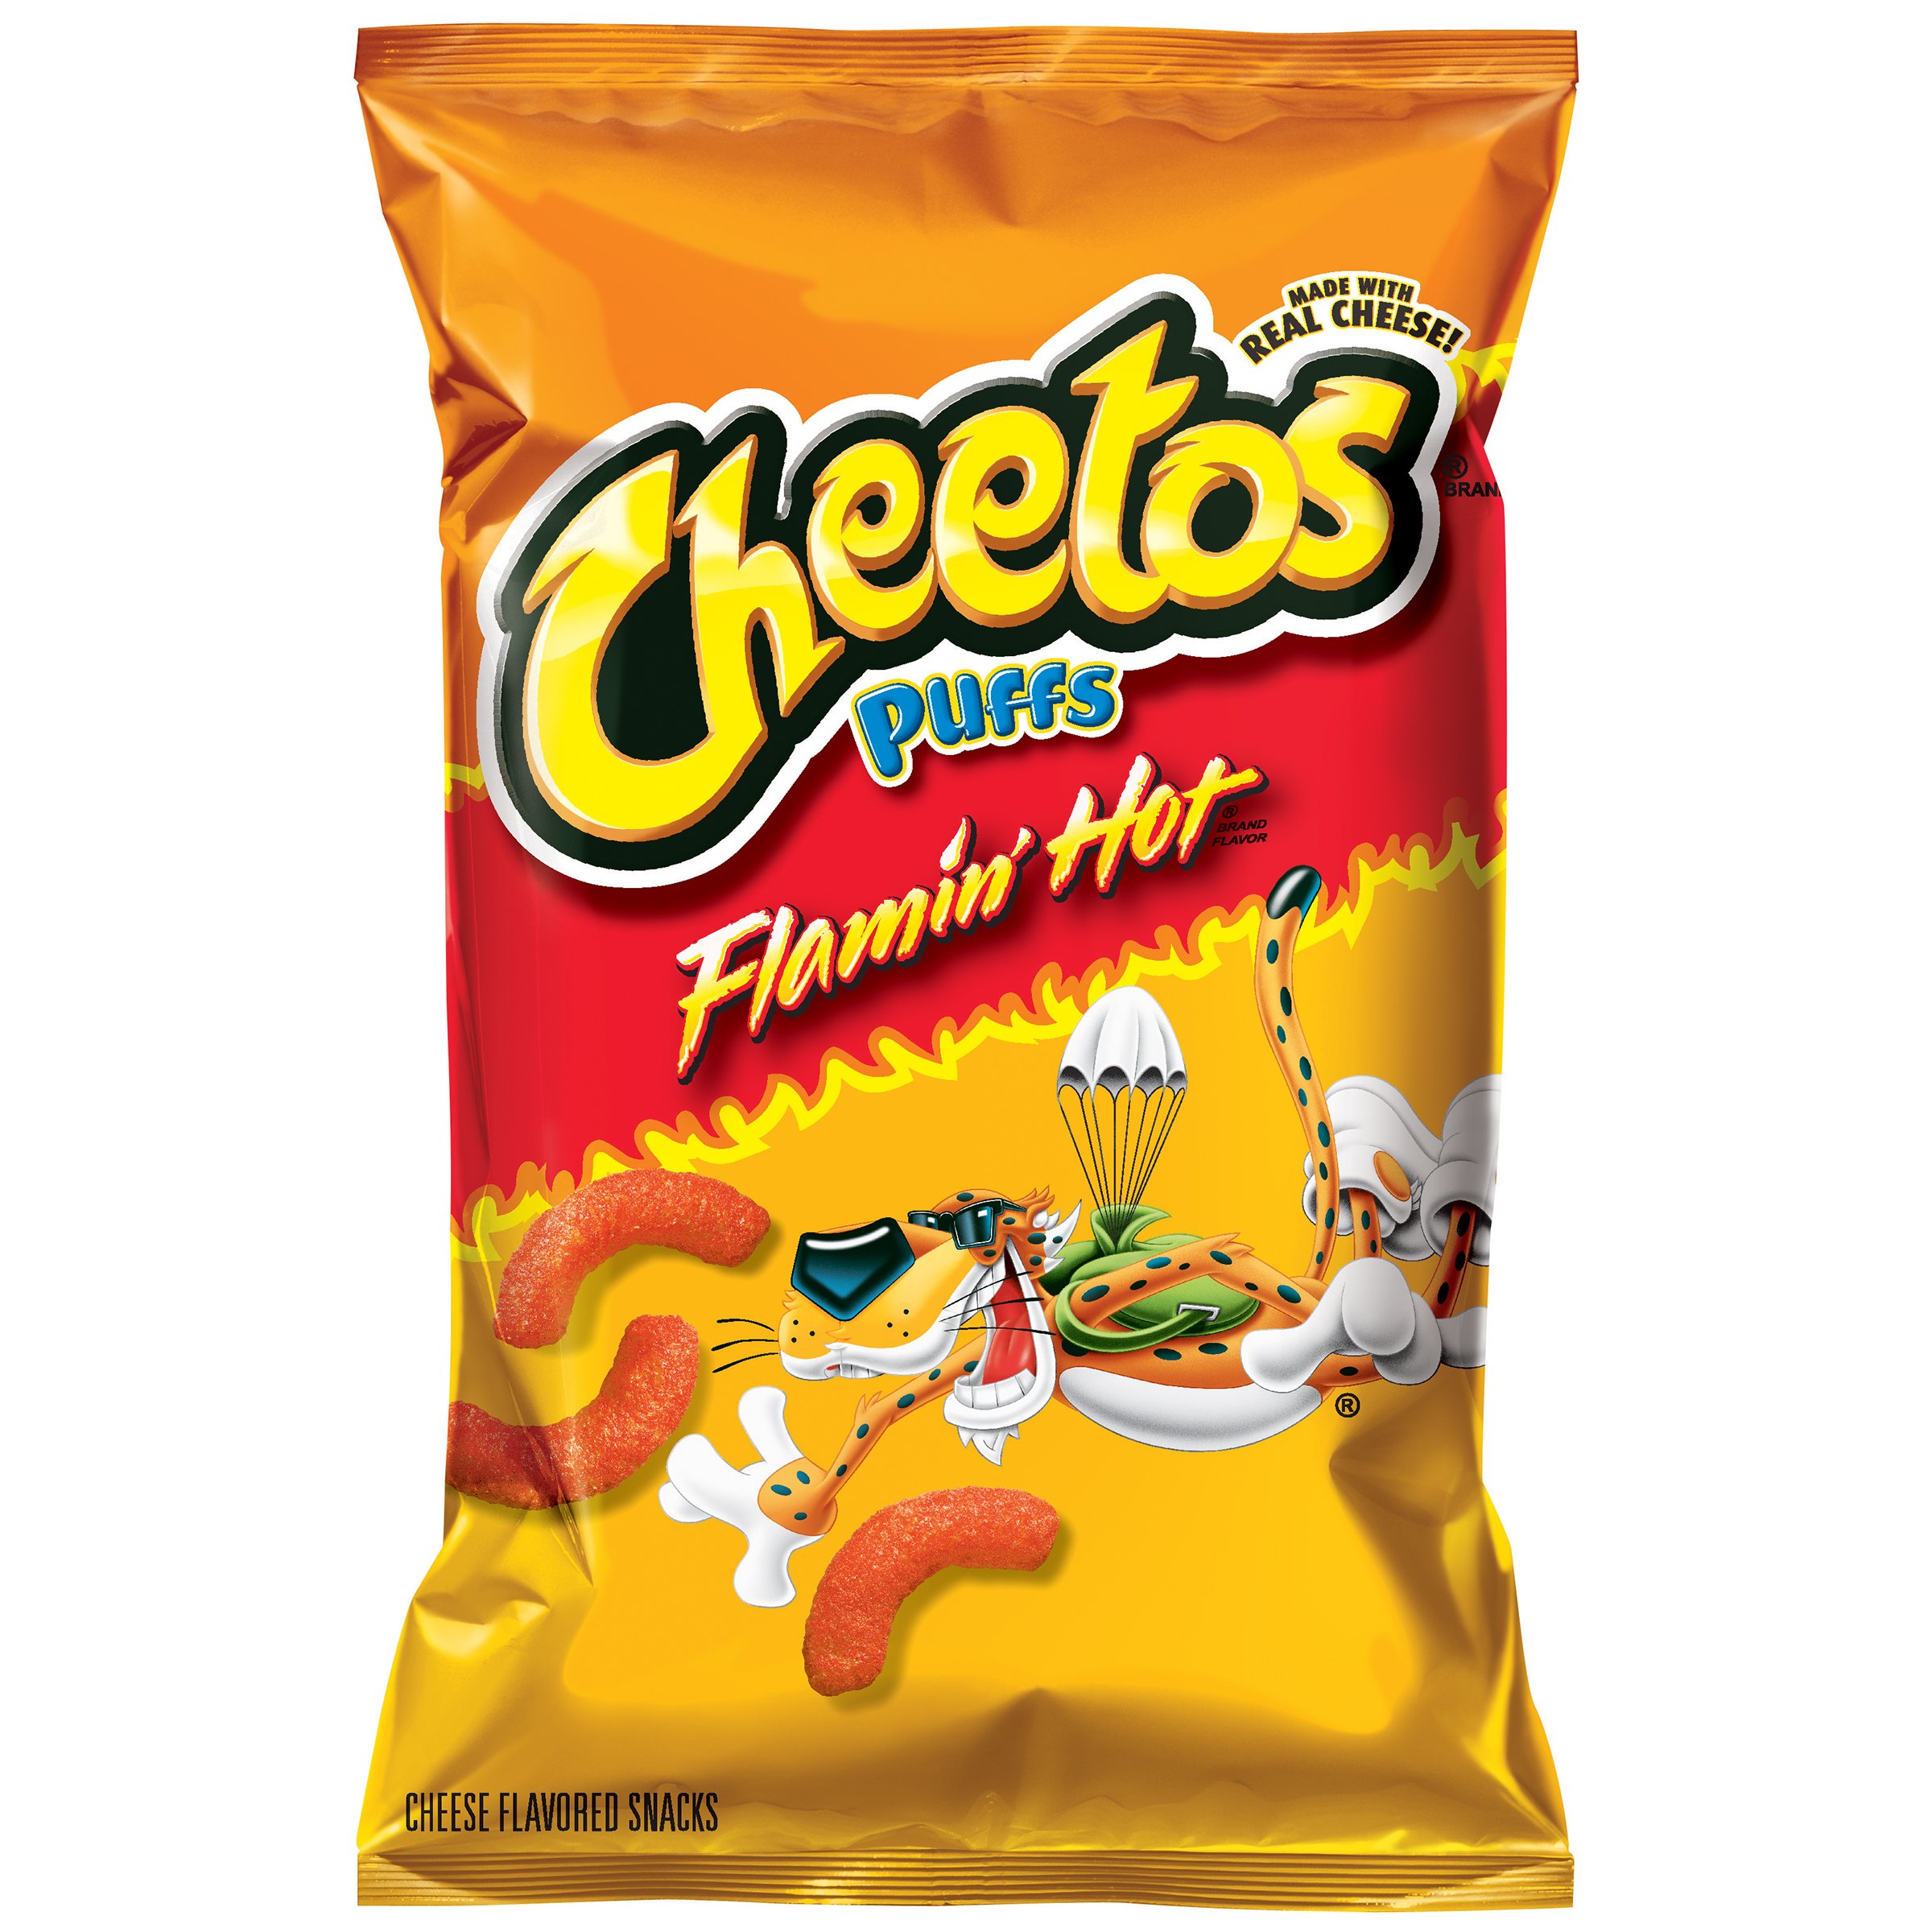 Cheetos Crunchy Flamin' Hot Cheese Flavored Snacks - 3.5oz